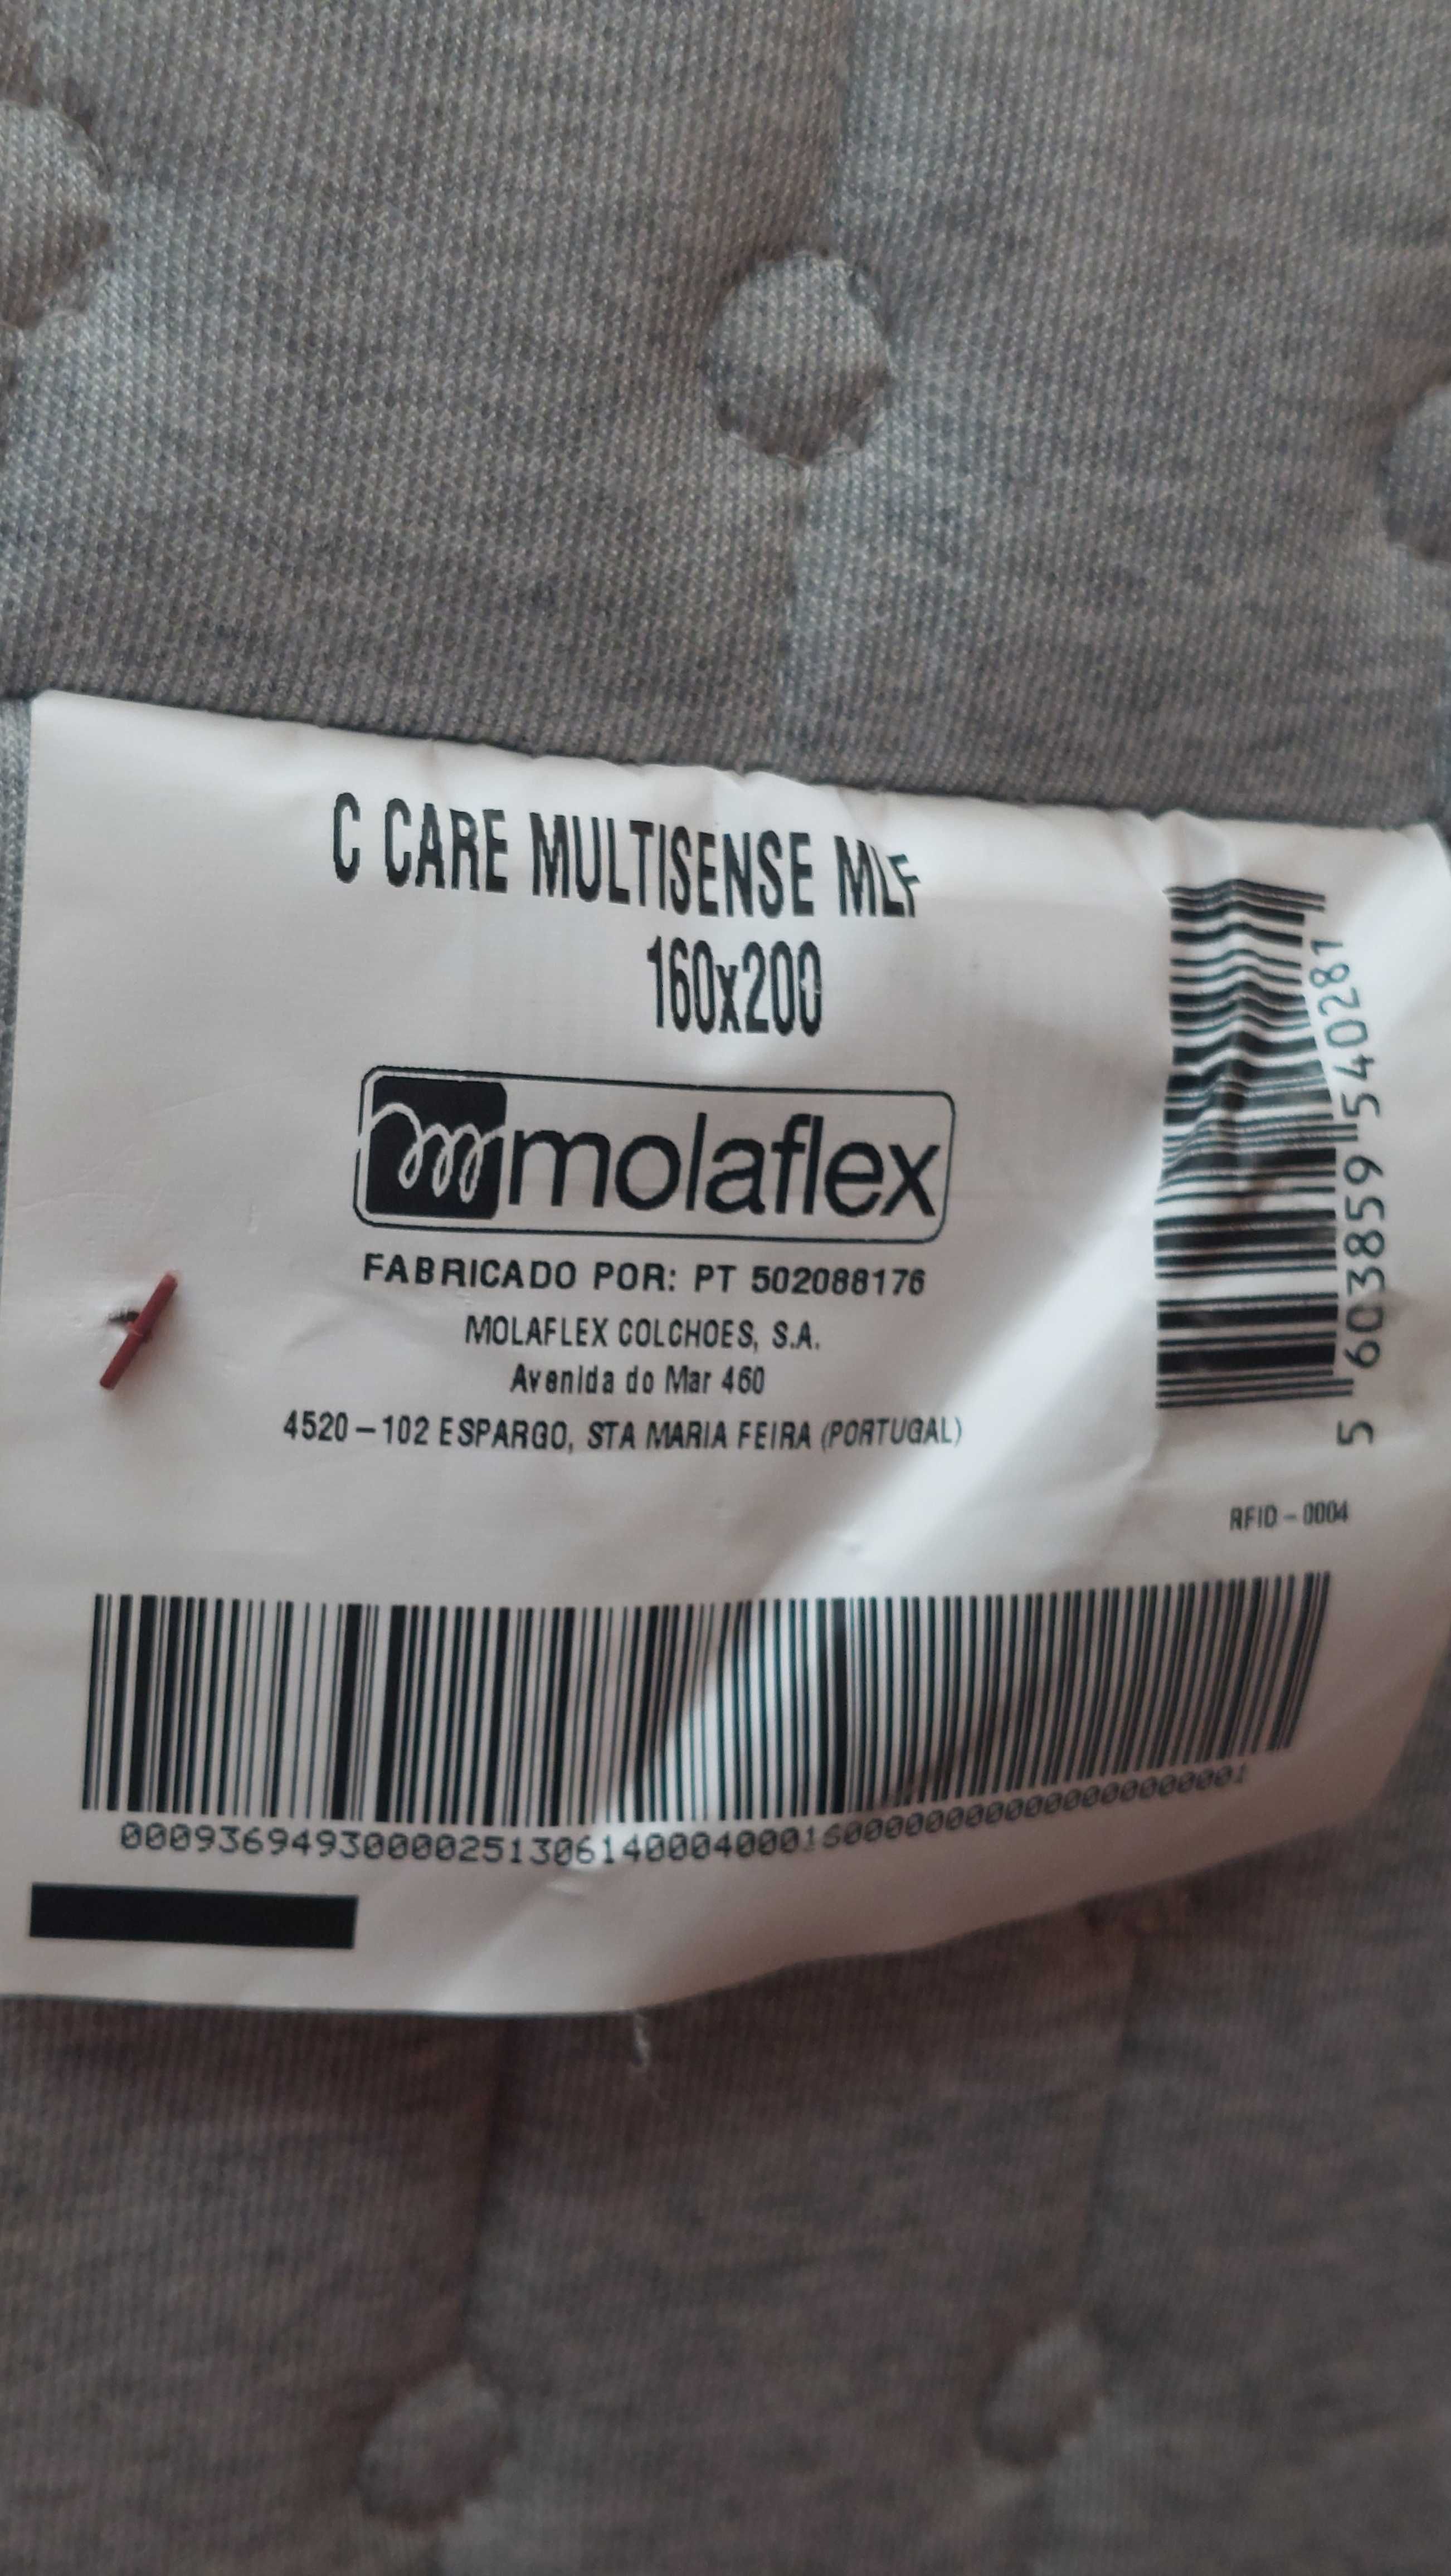 Colchão MOLAFLEX Care Multisense (160x200).